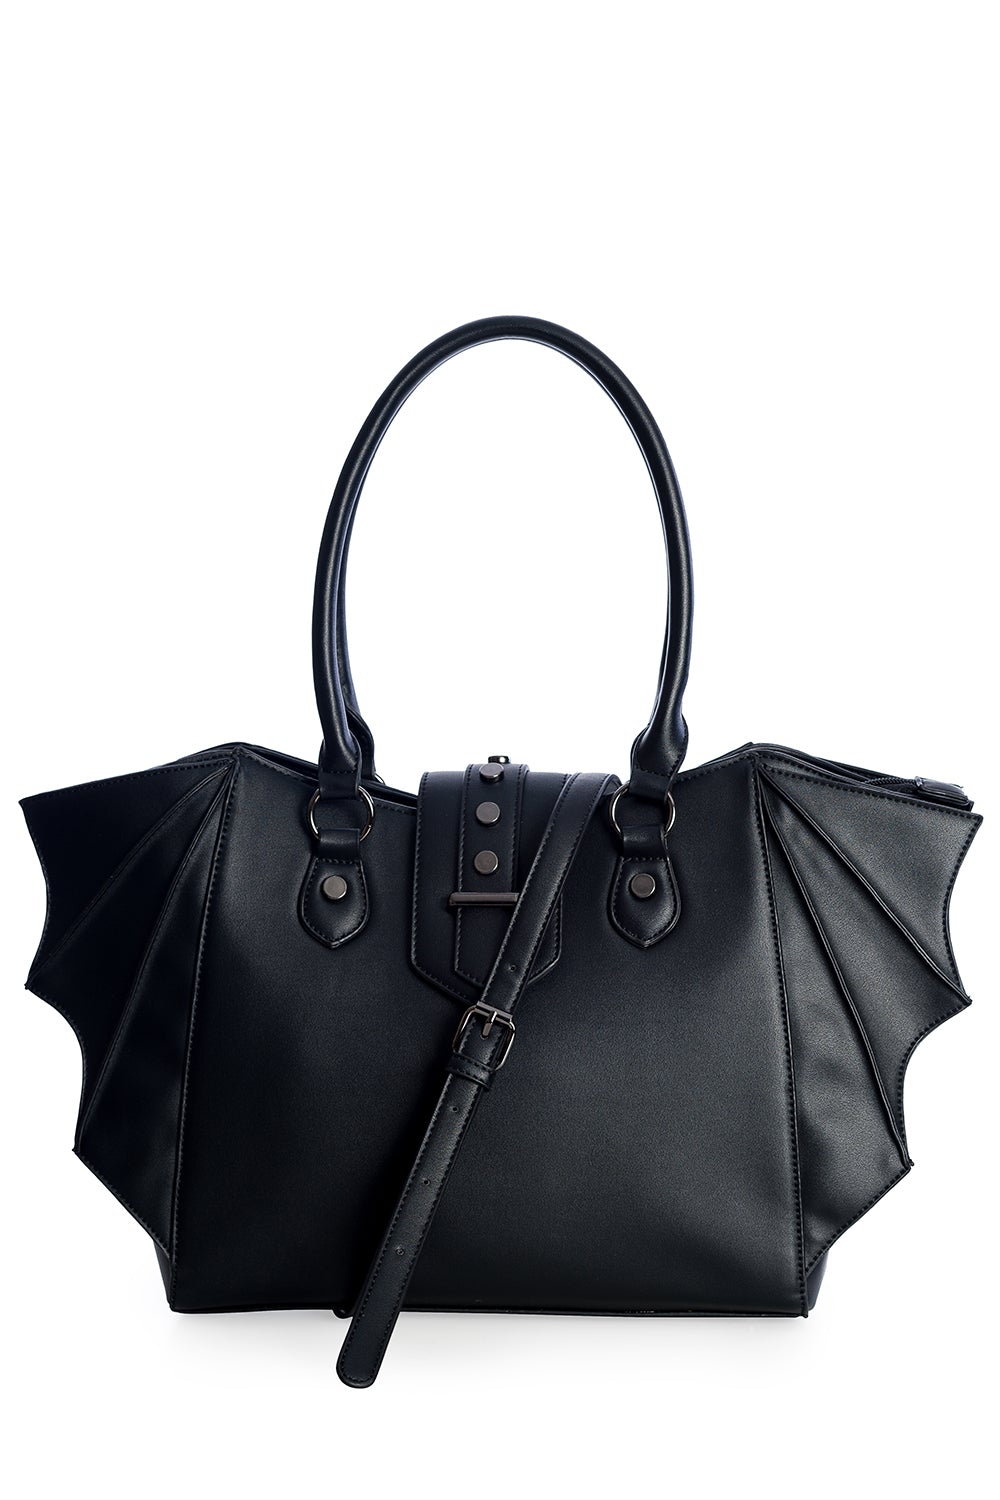 Black handbag with bat wing side details with additional long strap